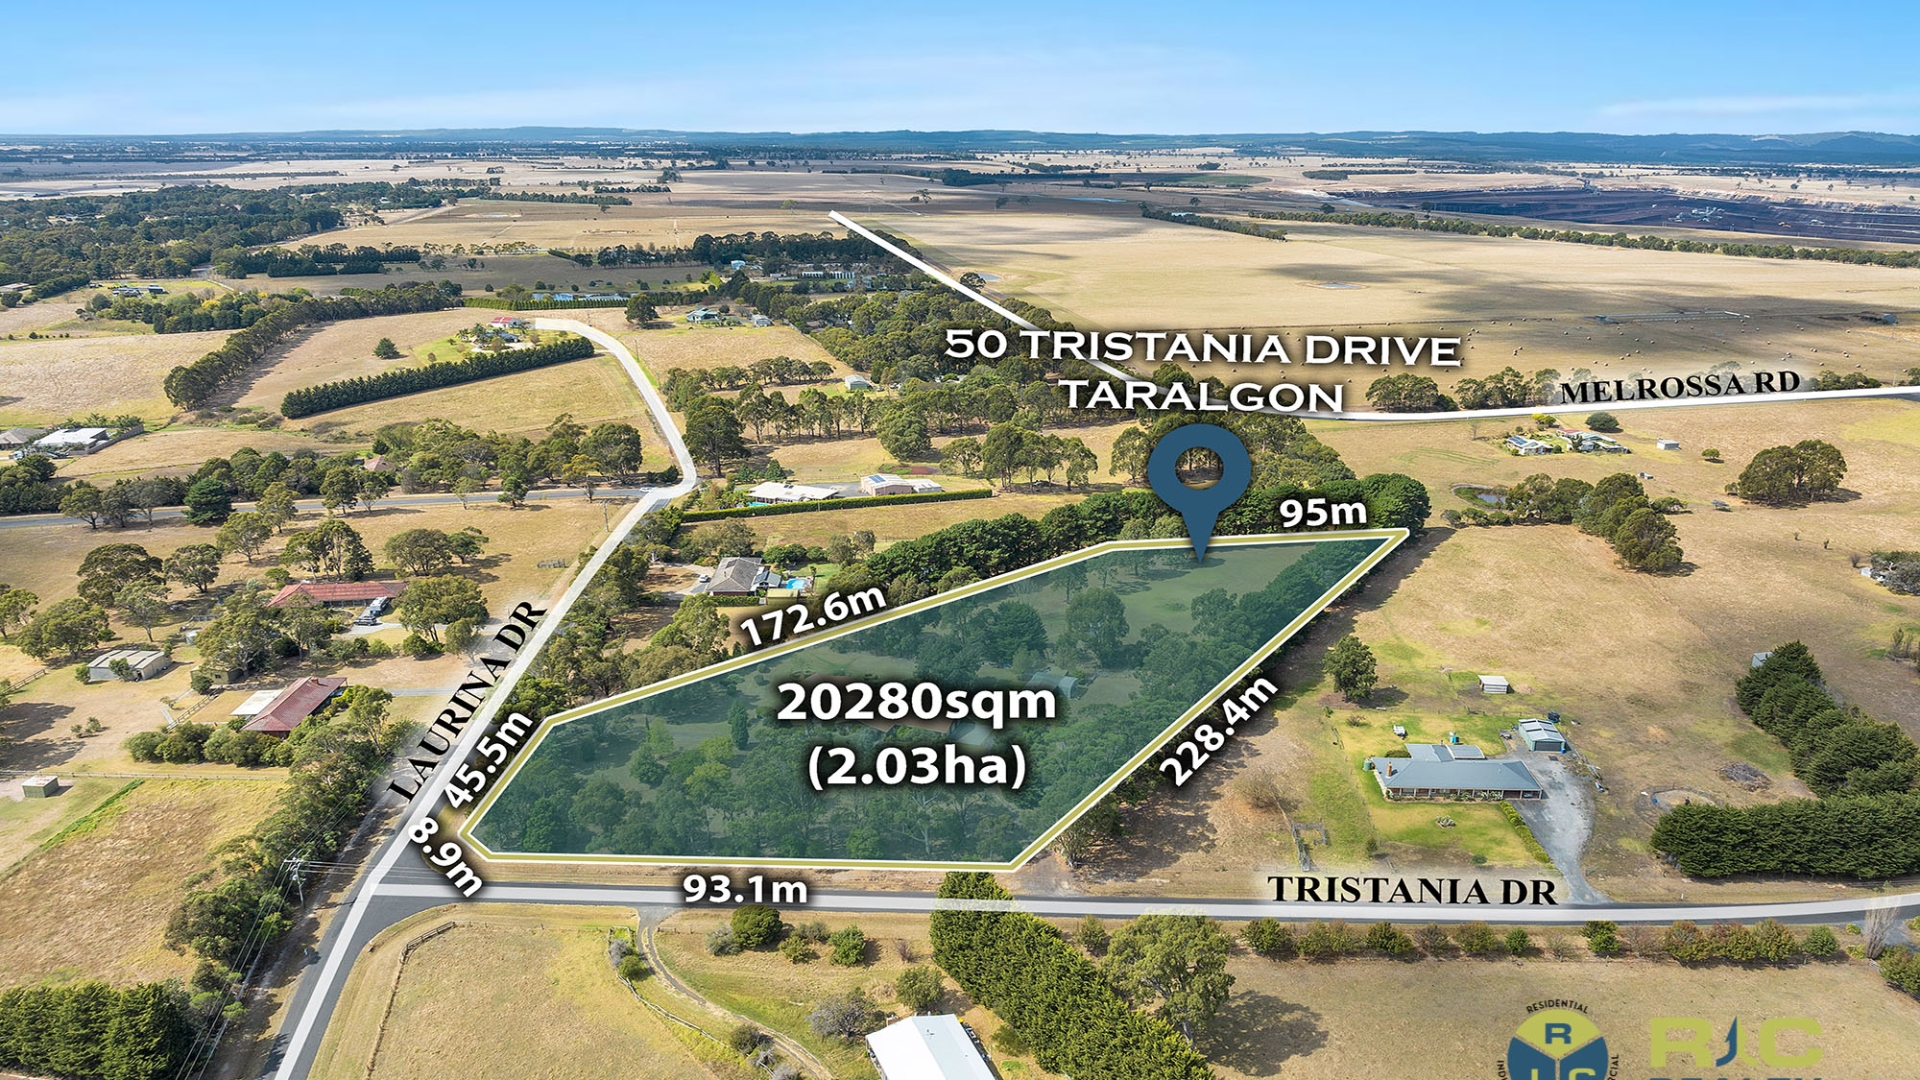 50 Tristania Drive, TRARALGON, VIC 3844 Australia